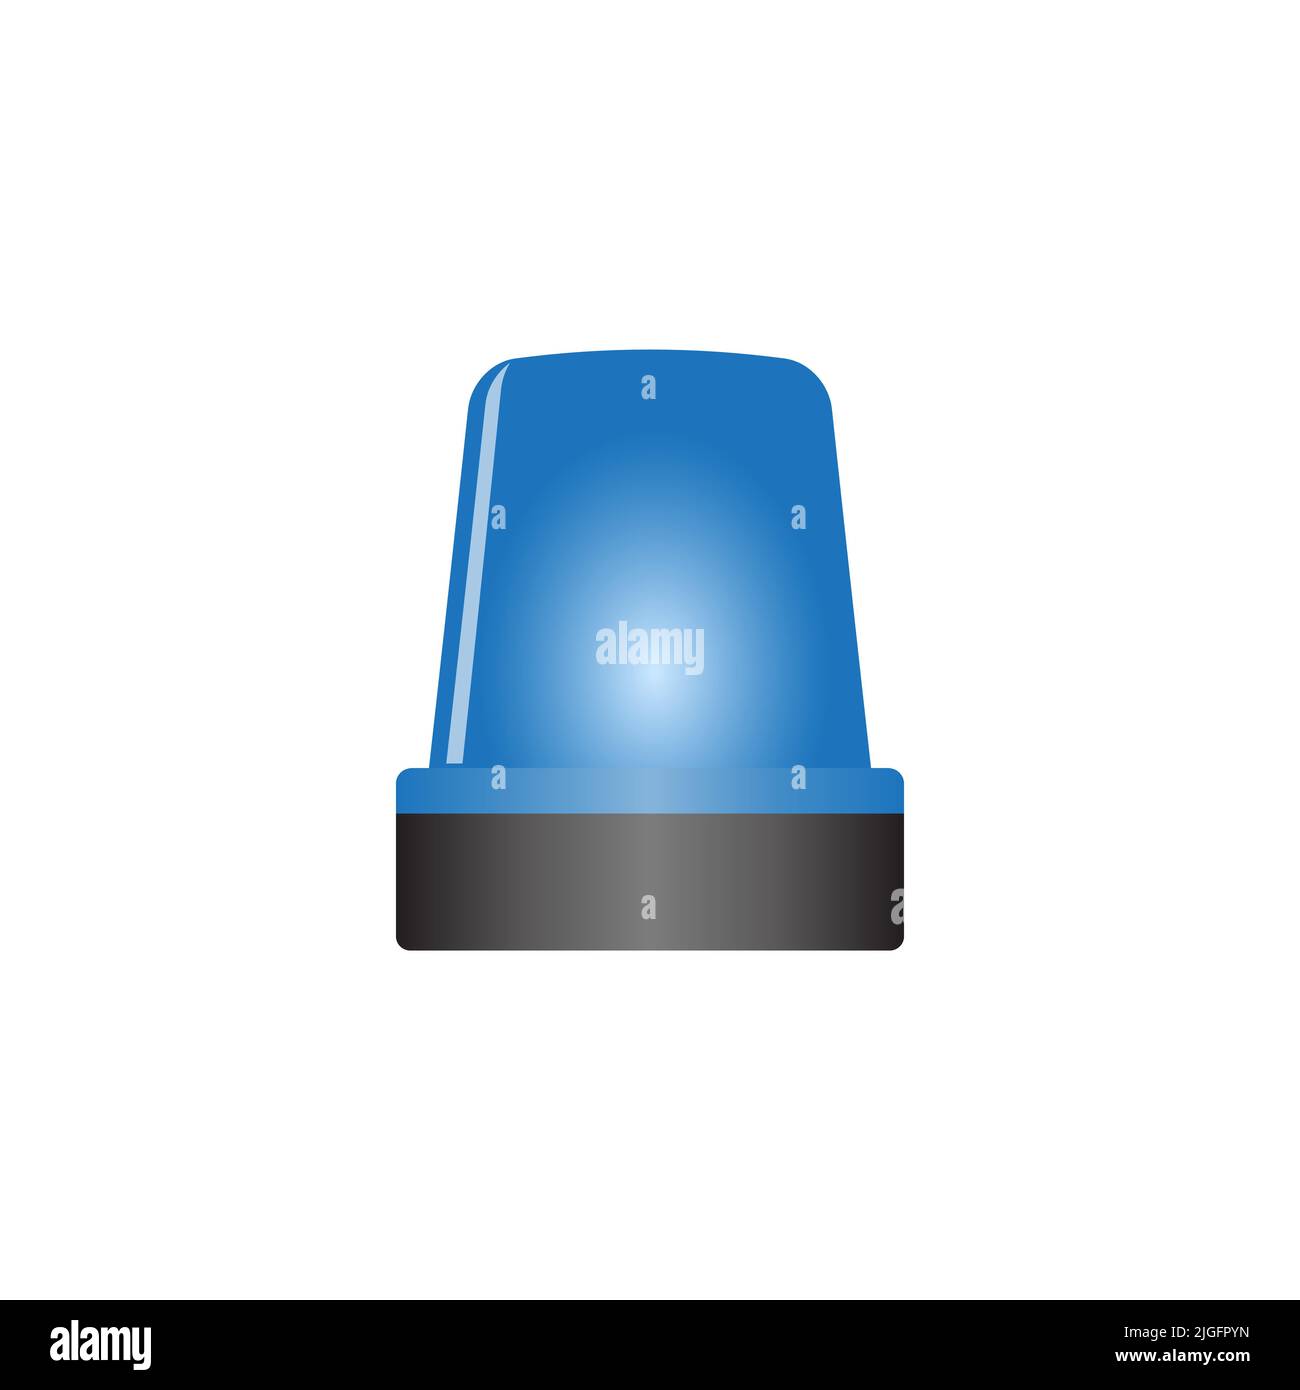 Police or ambulance blue flashing light icon isolated on white background Stock Vector